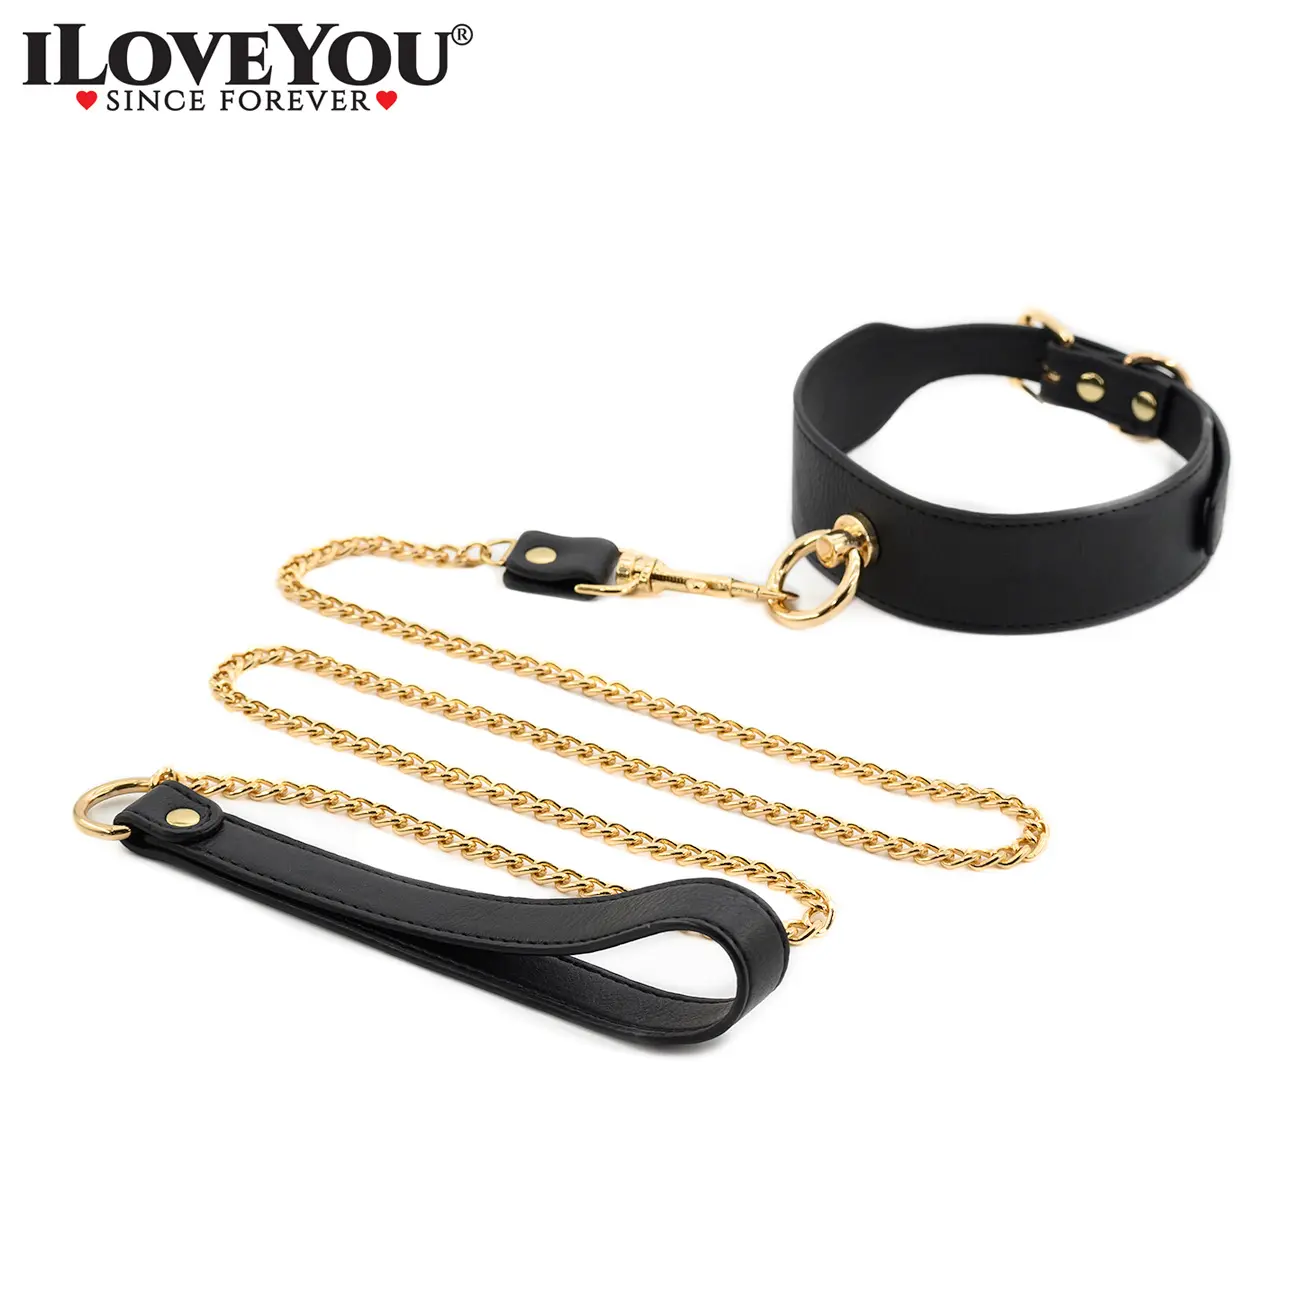 Kinky Collar with Gold Chain Leash